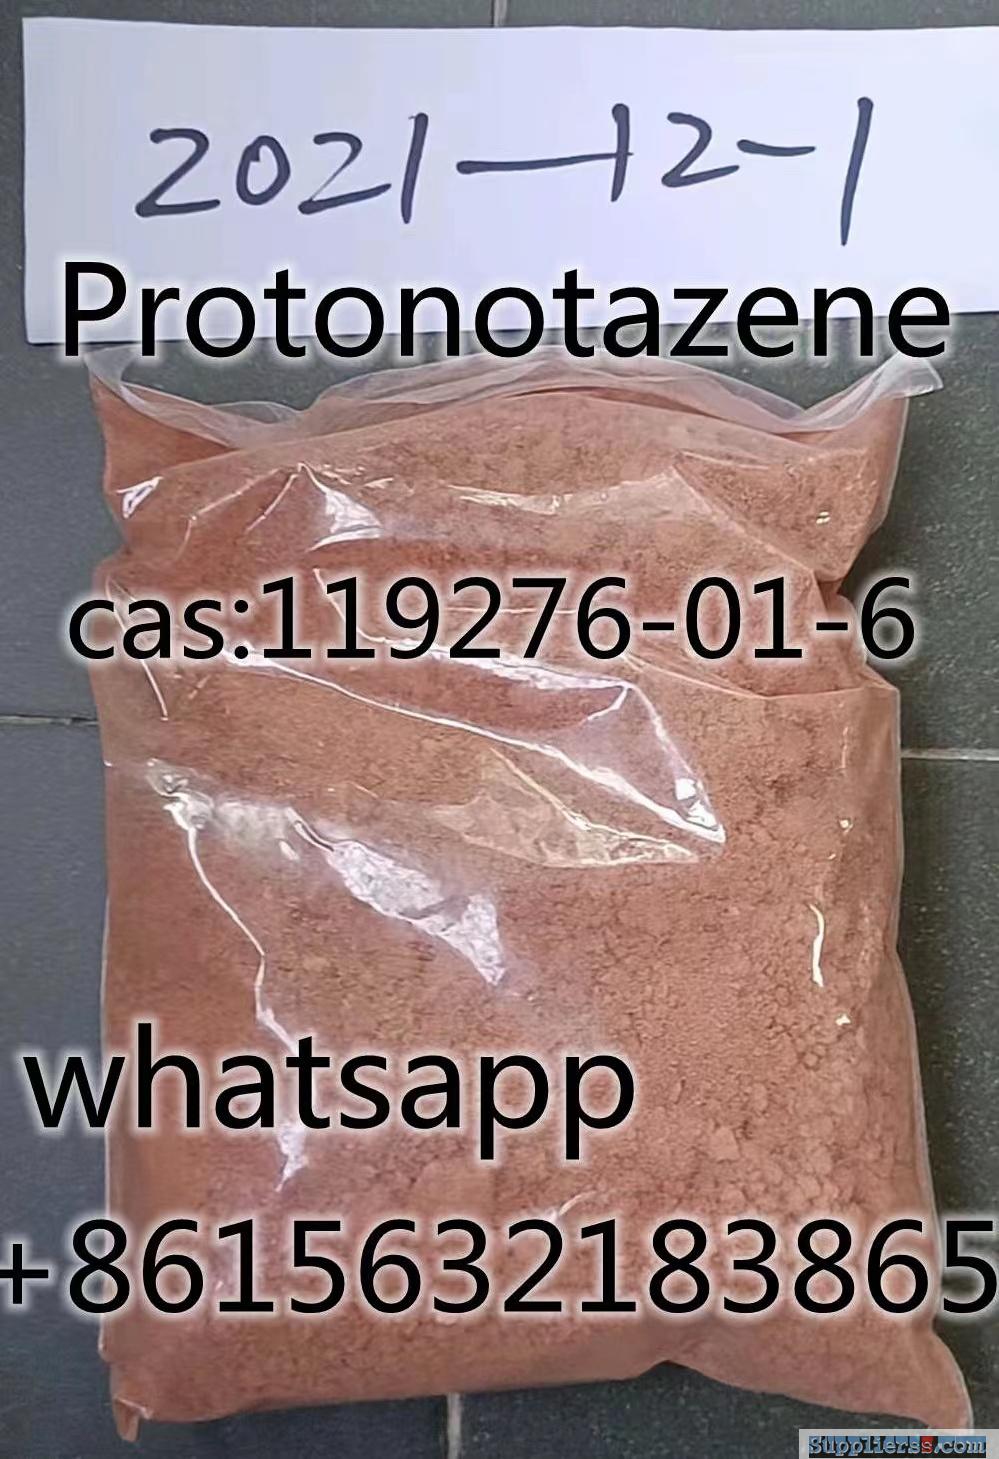 Selling high quality Protonotazene cas119276-01-6